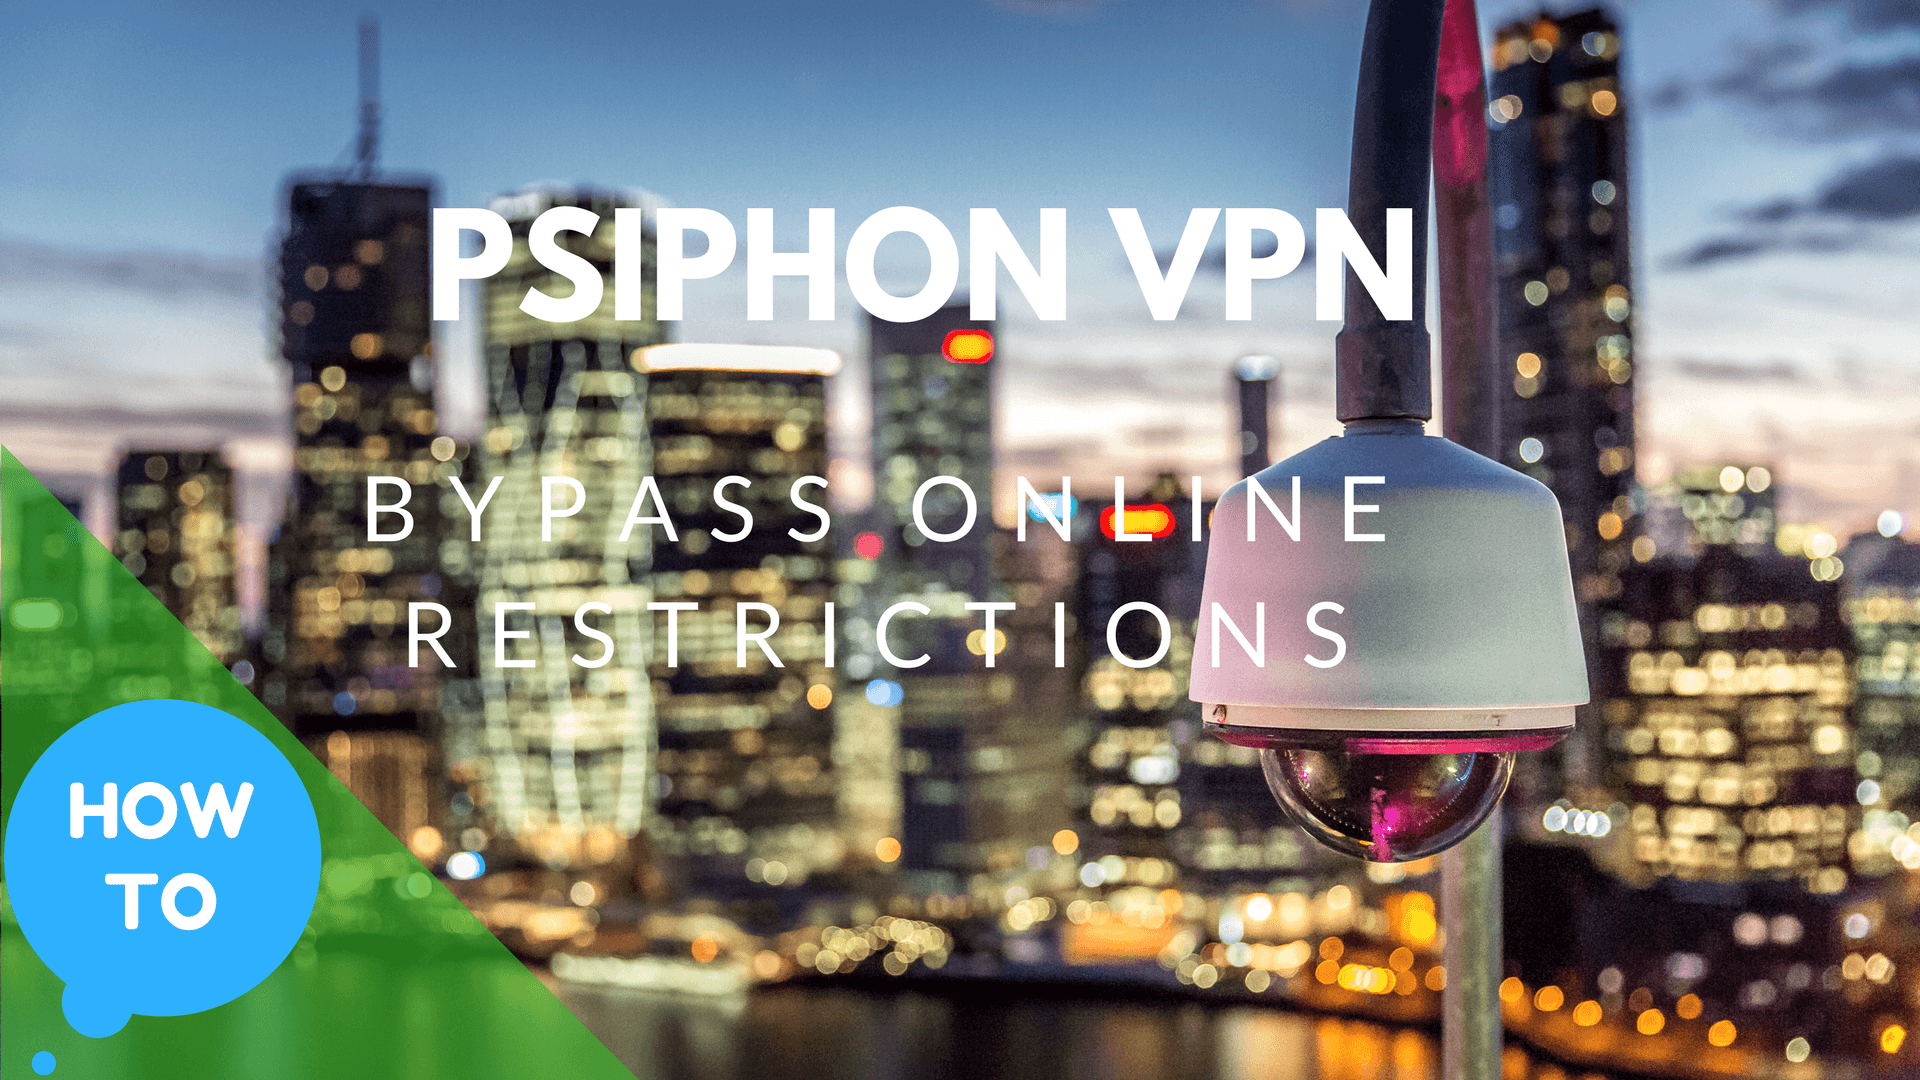 download vpn for windows 7 psiphon